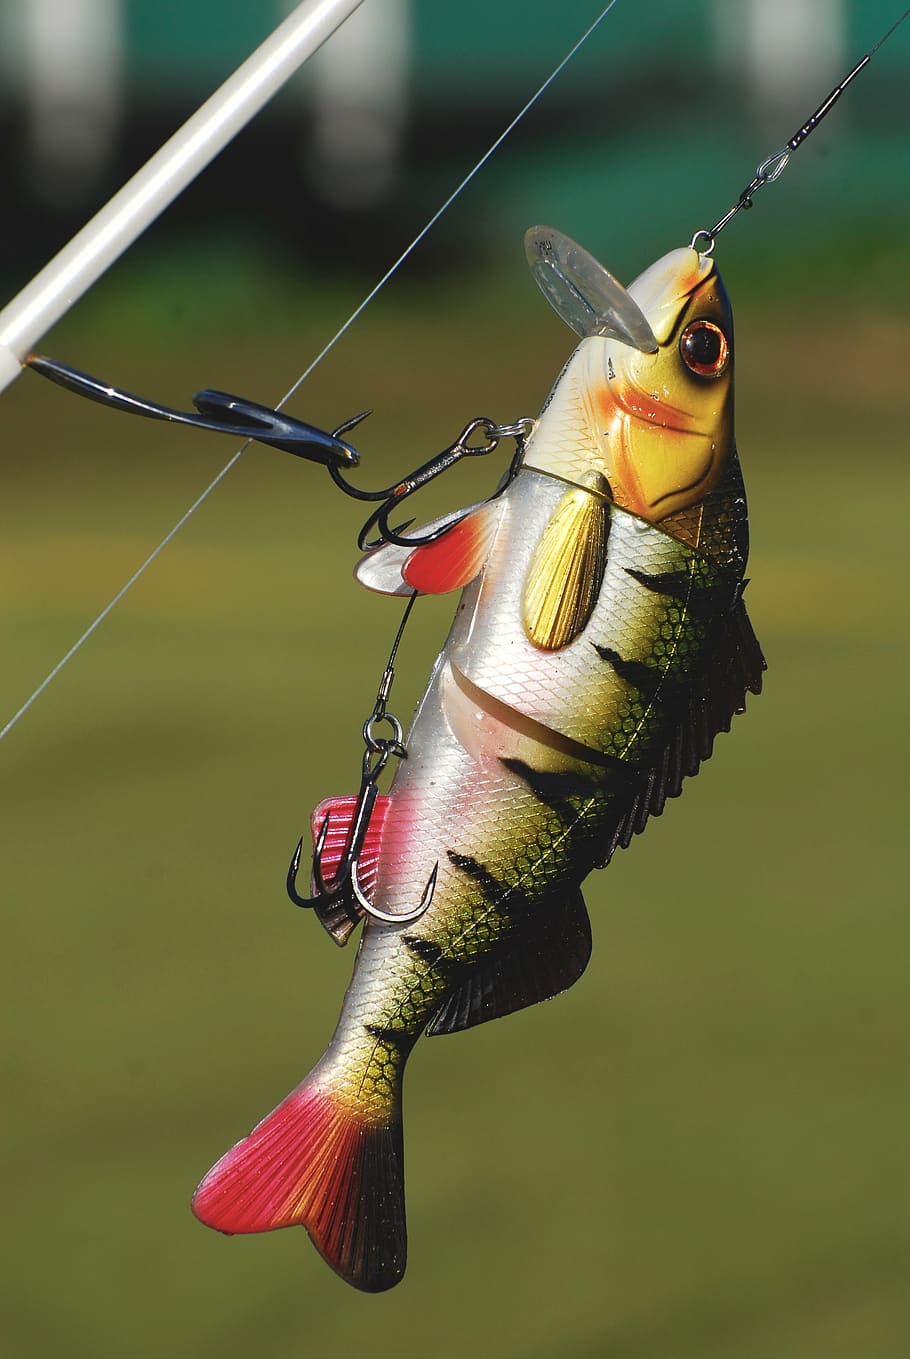 HD wallpaper: closeup photo of green and yellow fishing lure, angling,  tackle